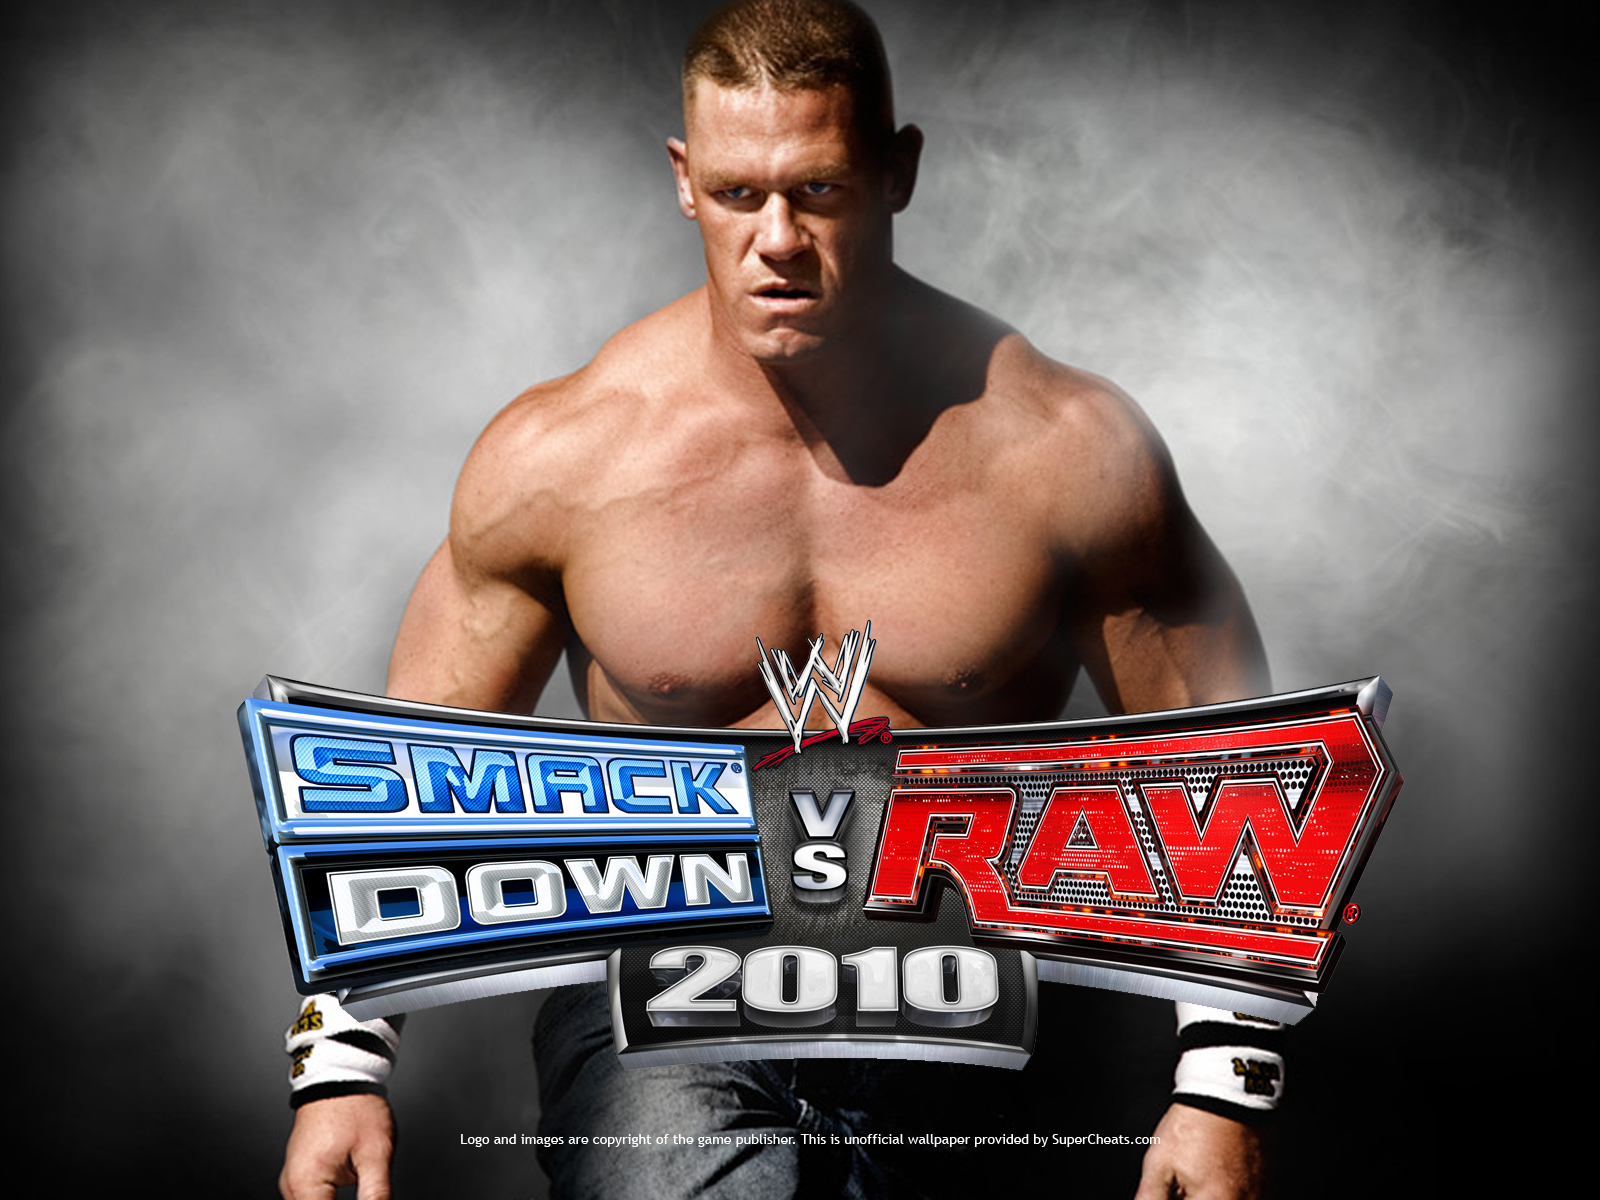 [50+] WWE Smackdown vs Raw Wallpaper on WallpaperSafari